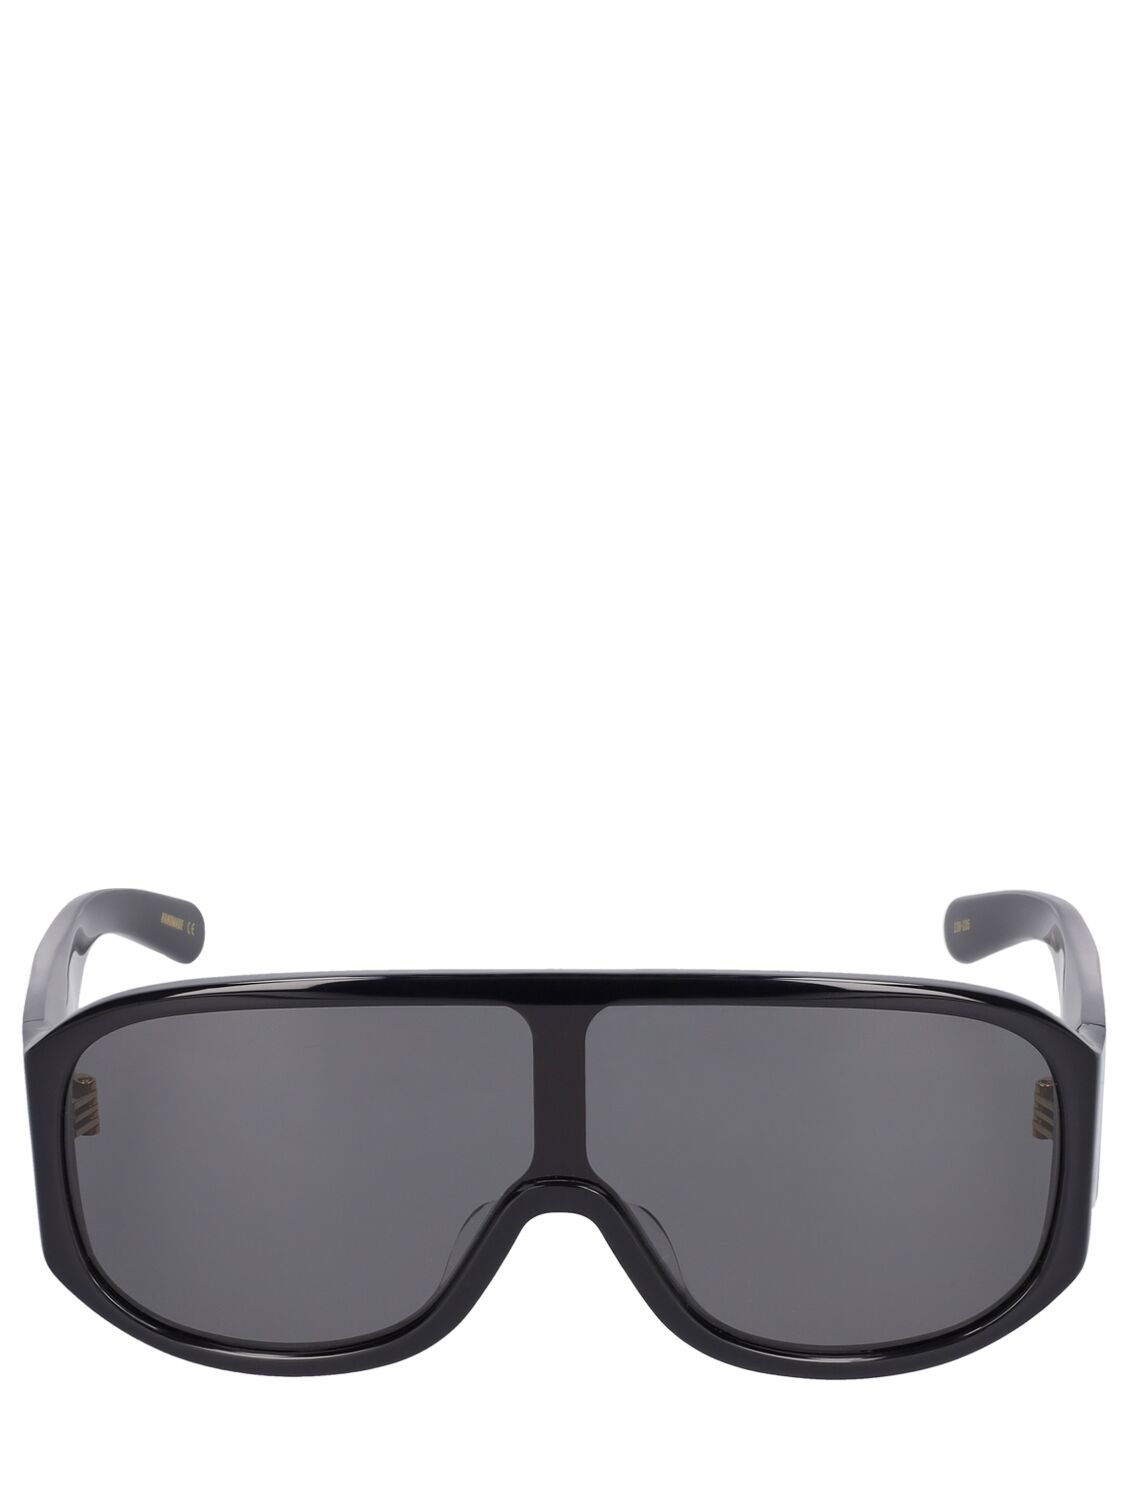 Flatlist Eyewear John Jovino Sunglasses In Black